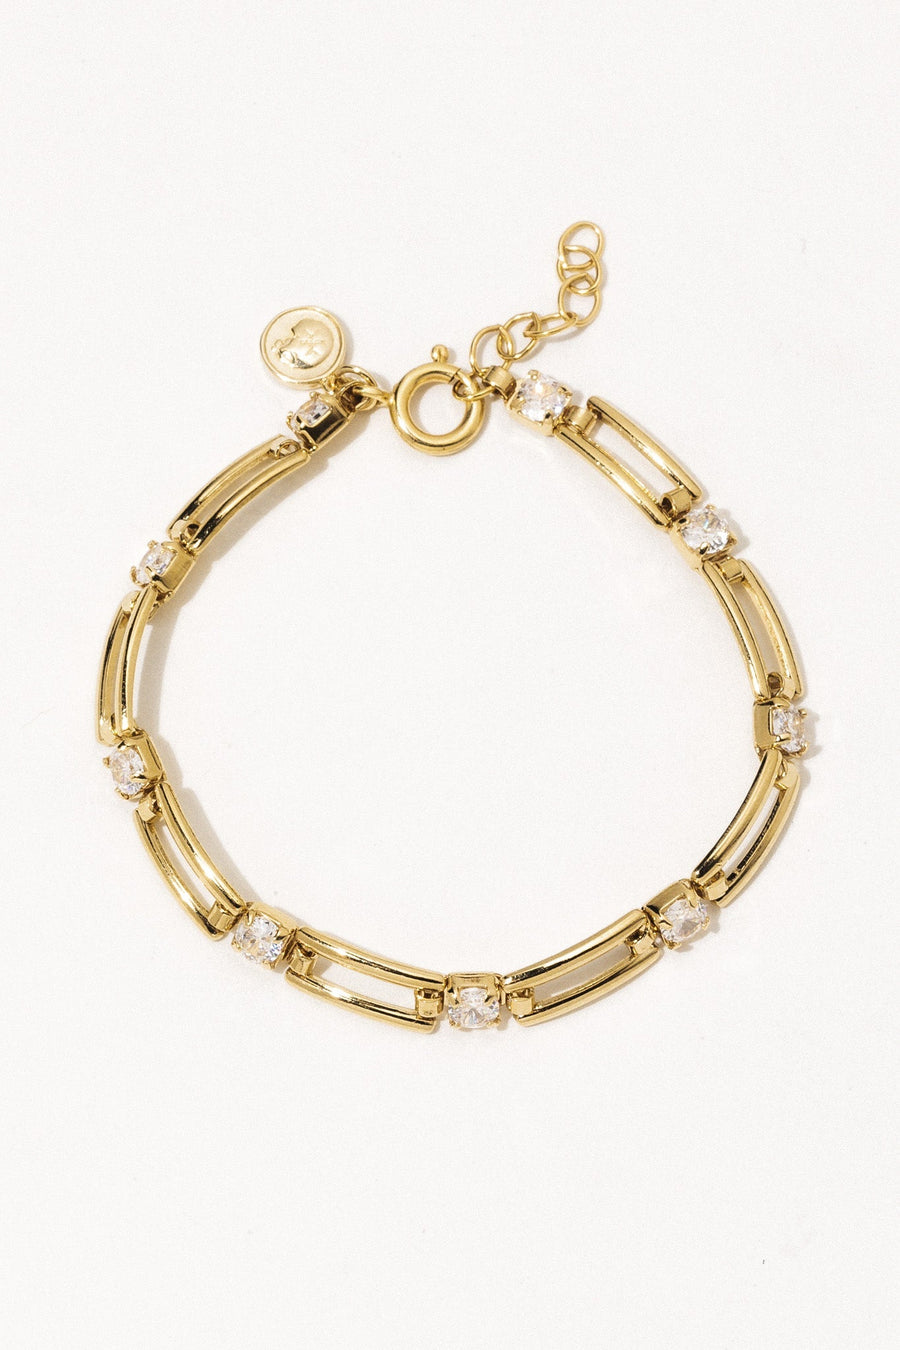 Goddess Jewelry Gold / 7 inches Gianna Bracelet